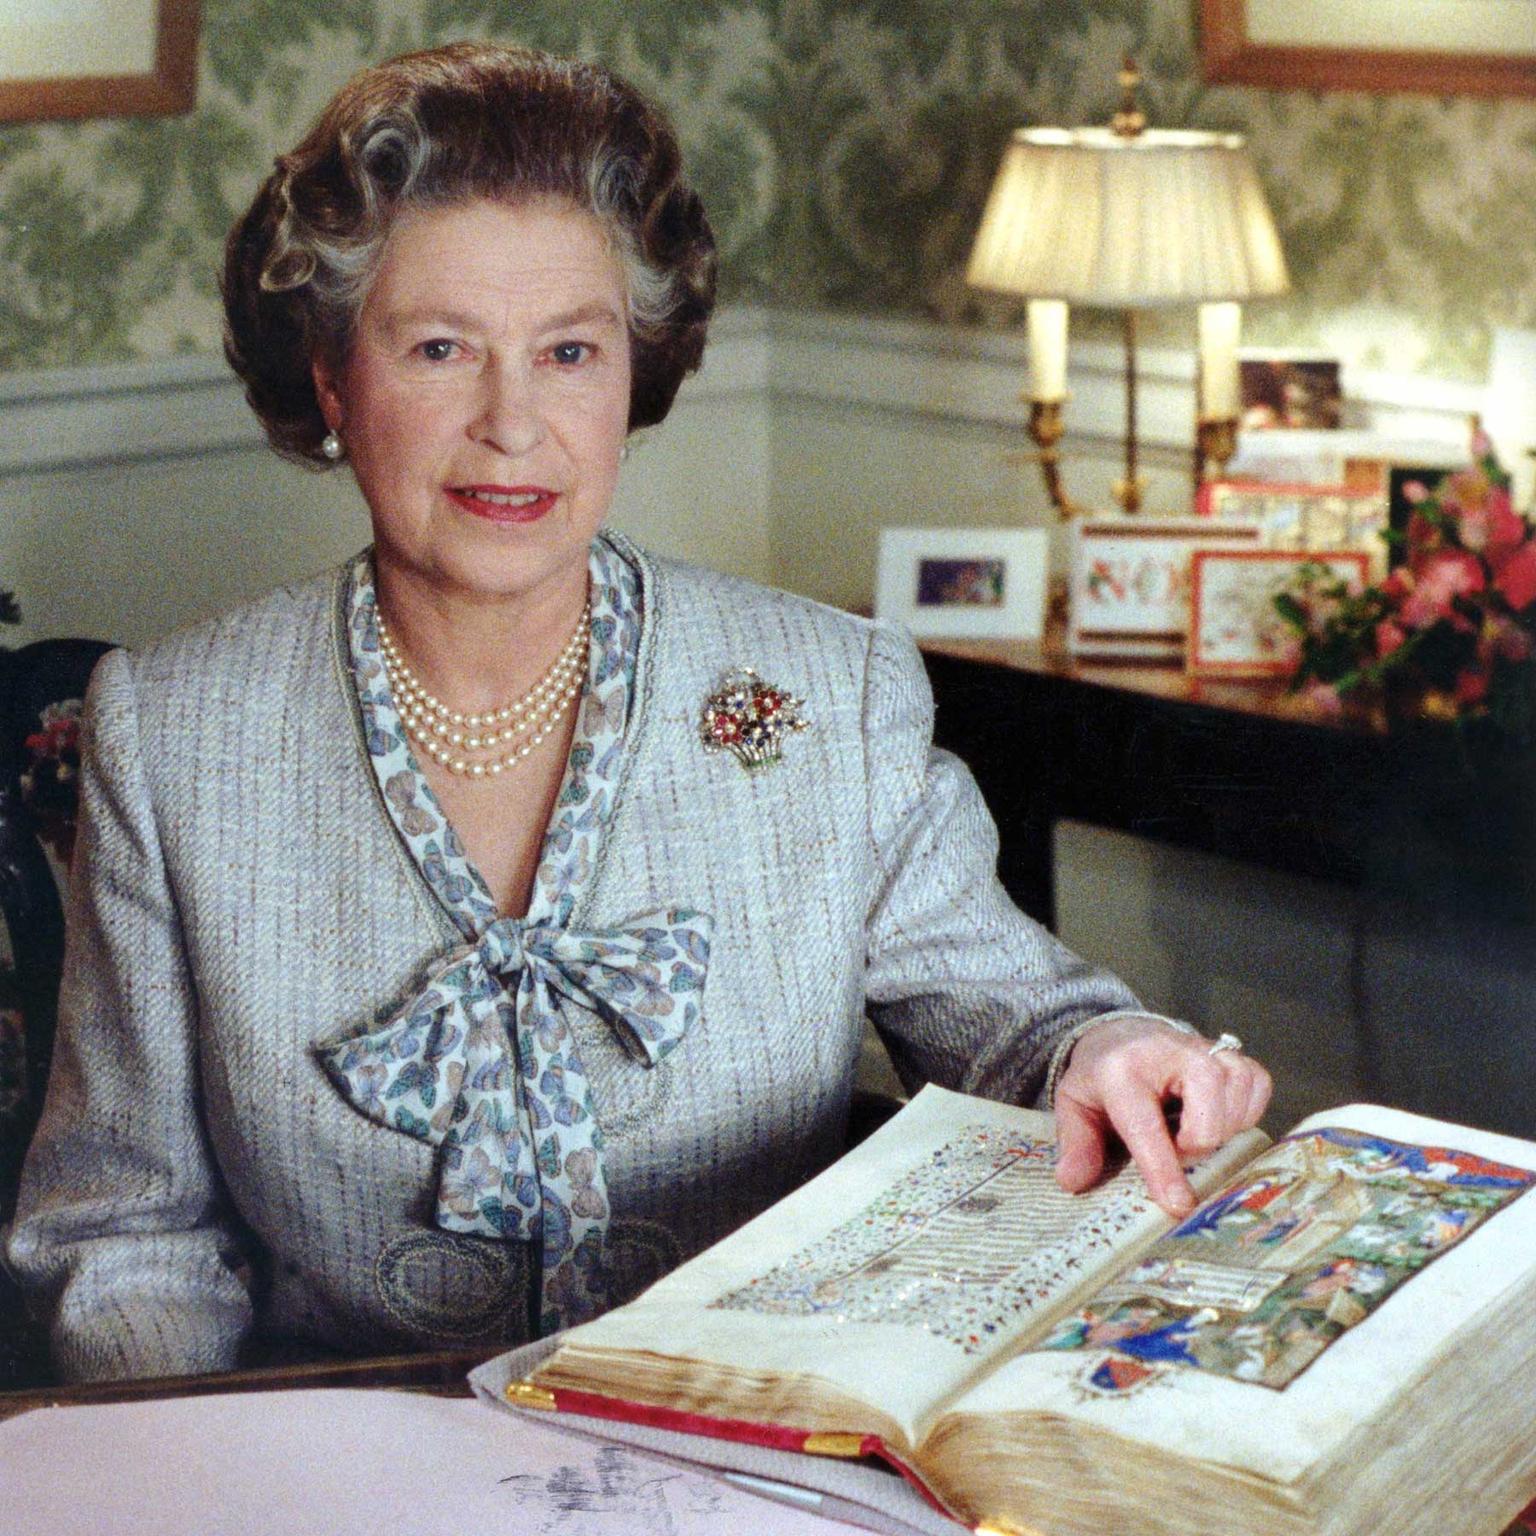 The Queen wearing the Flower Basket brooch